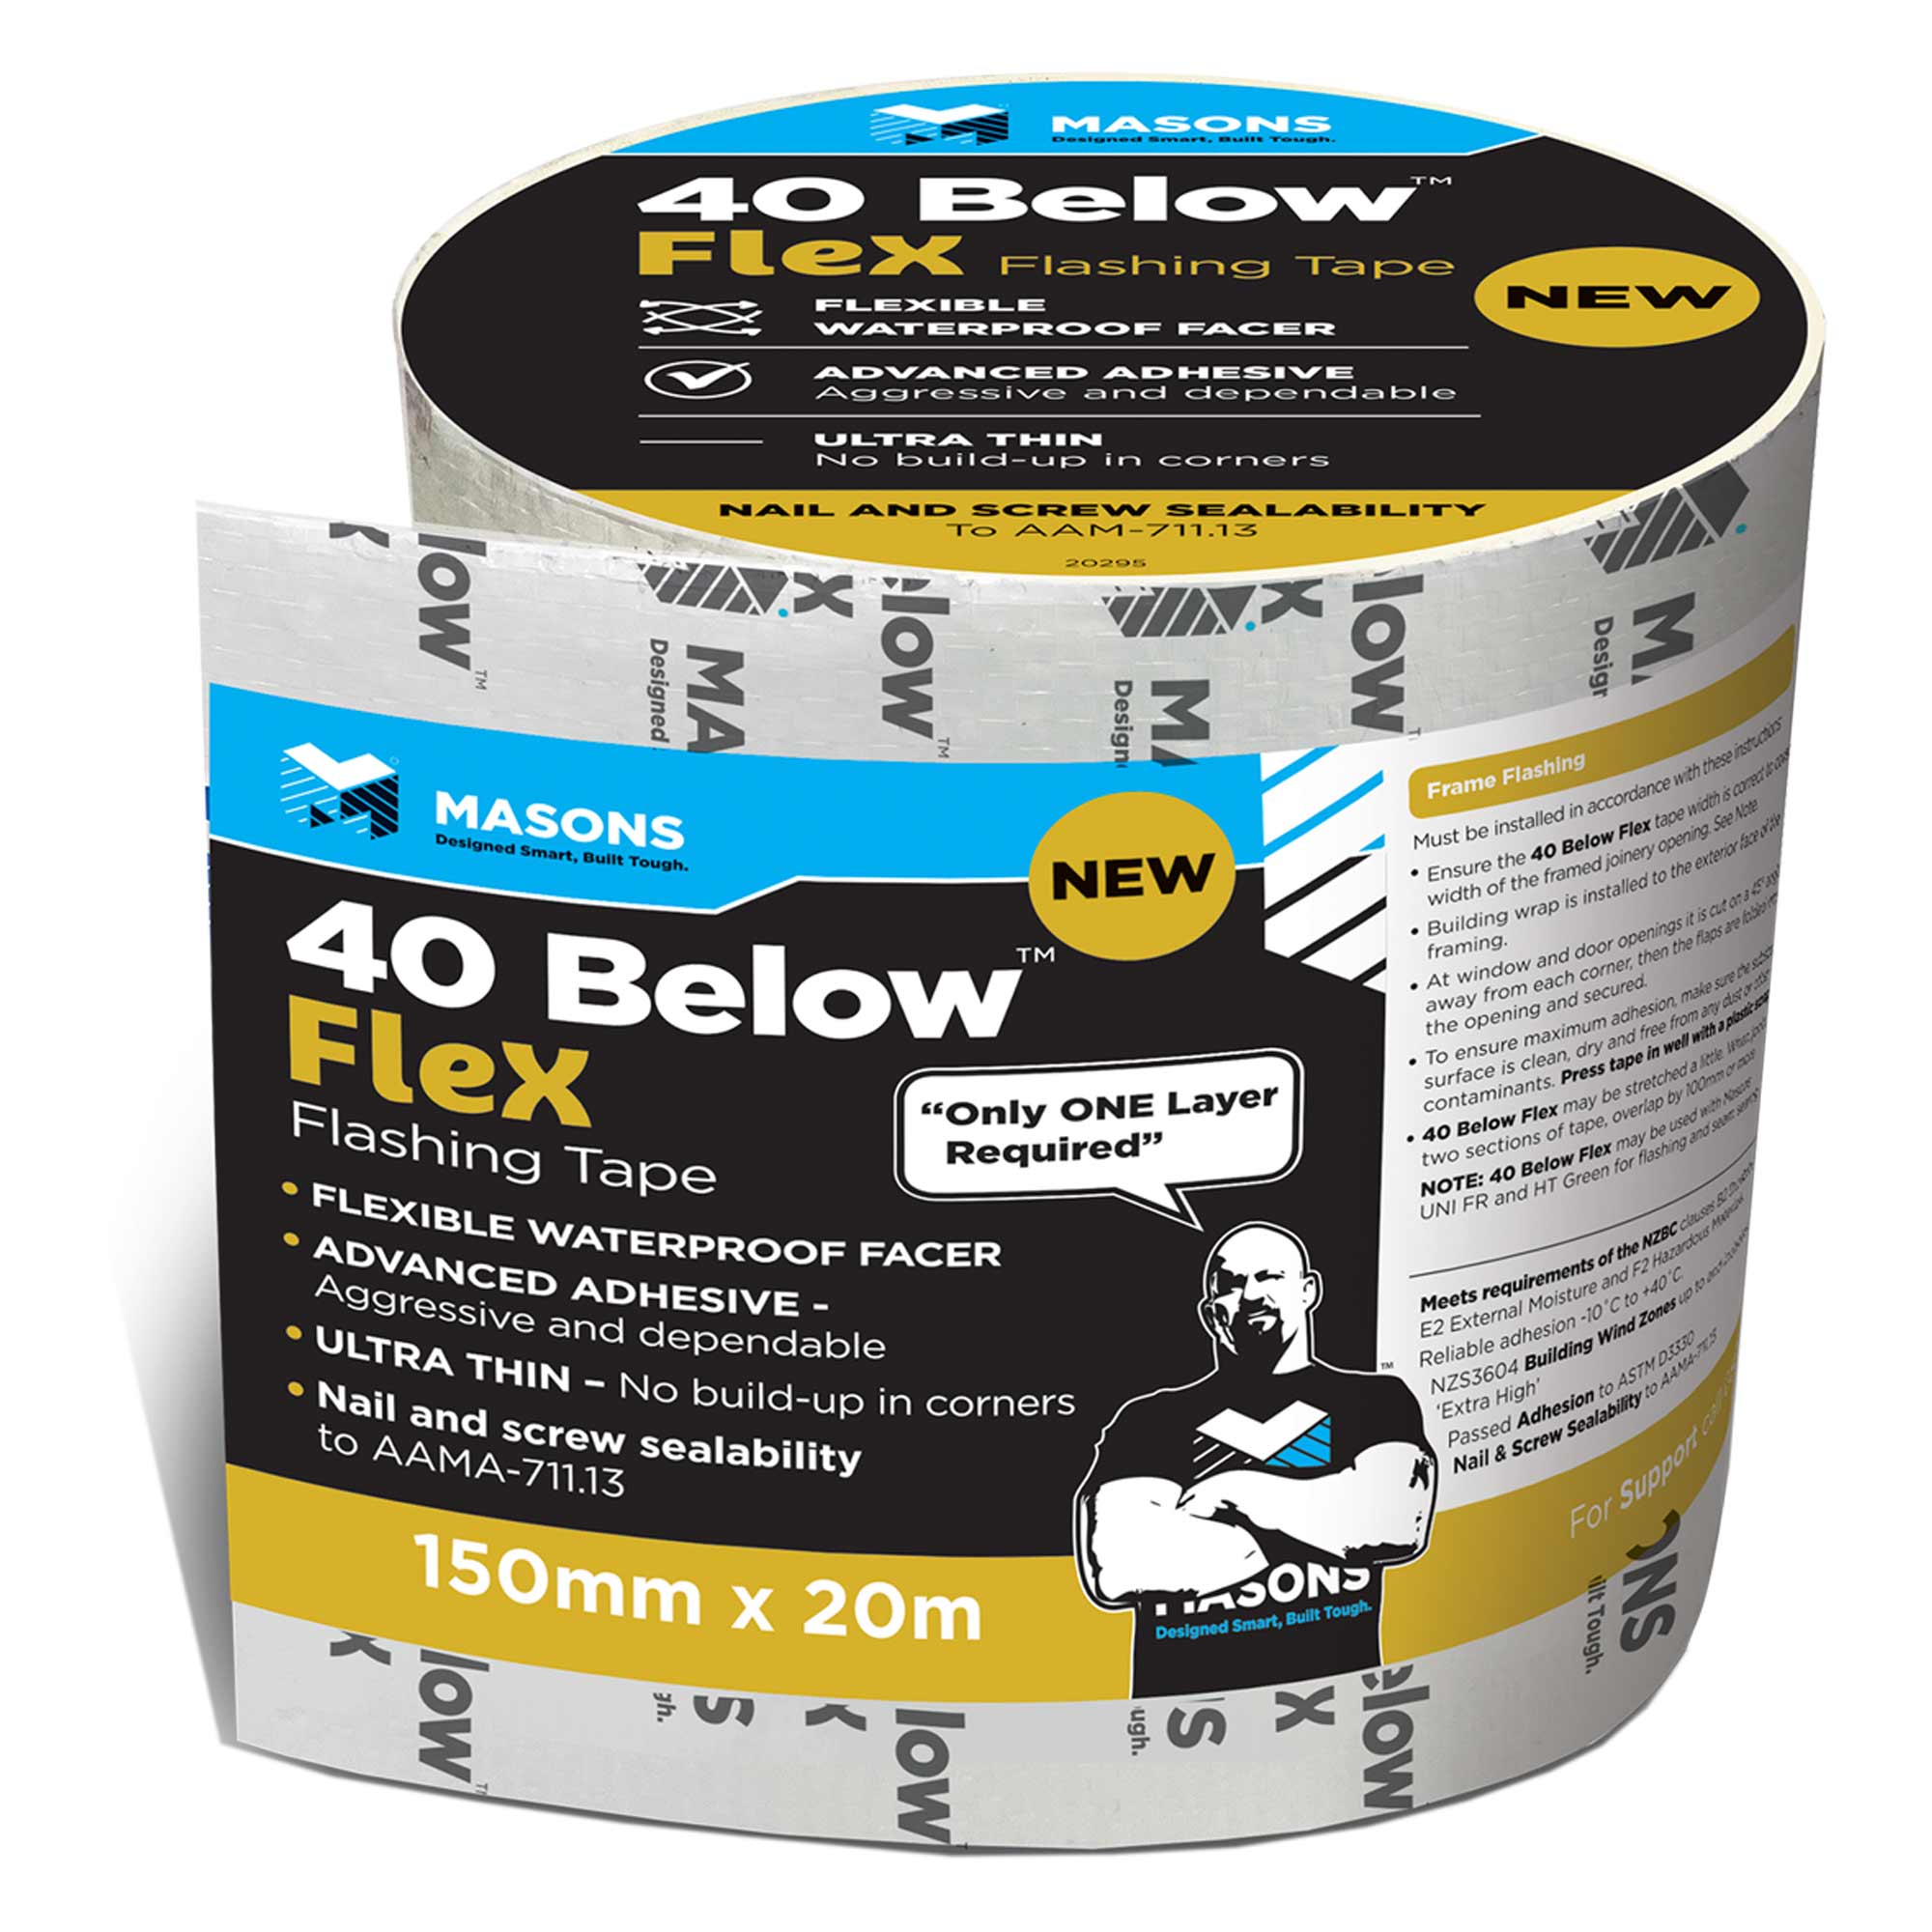 40 Below™ Flex Flashing Tape